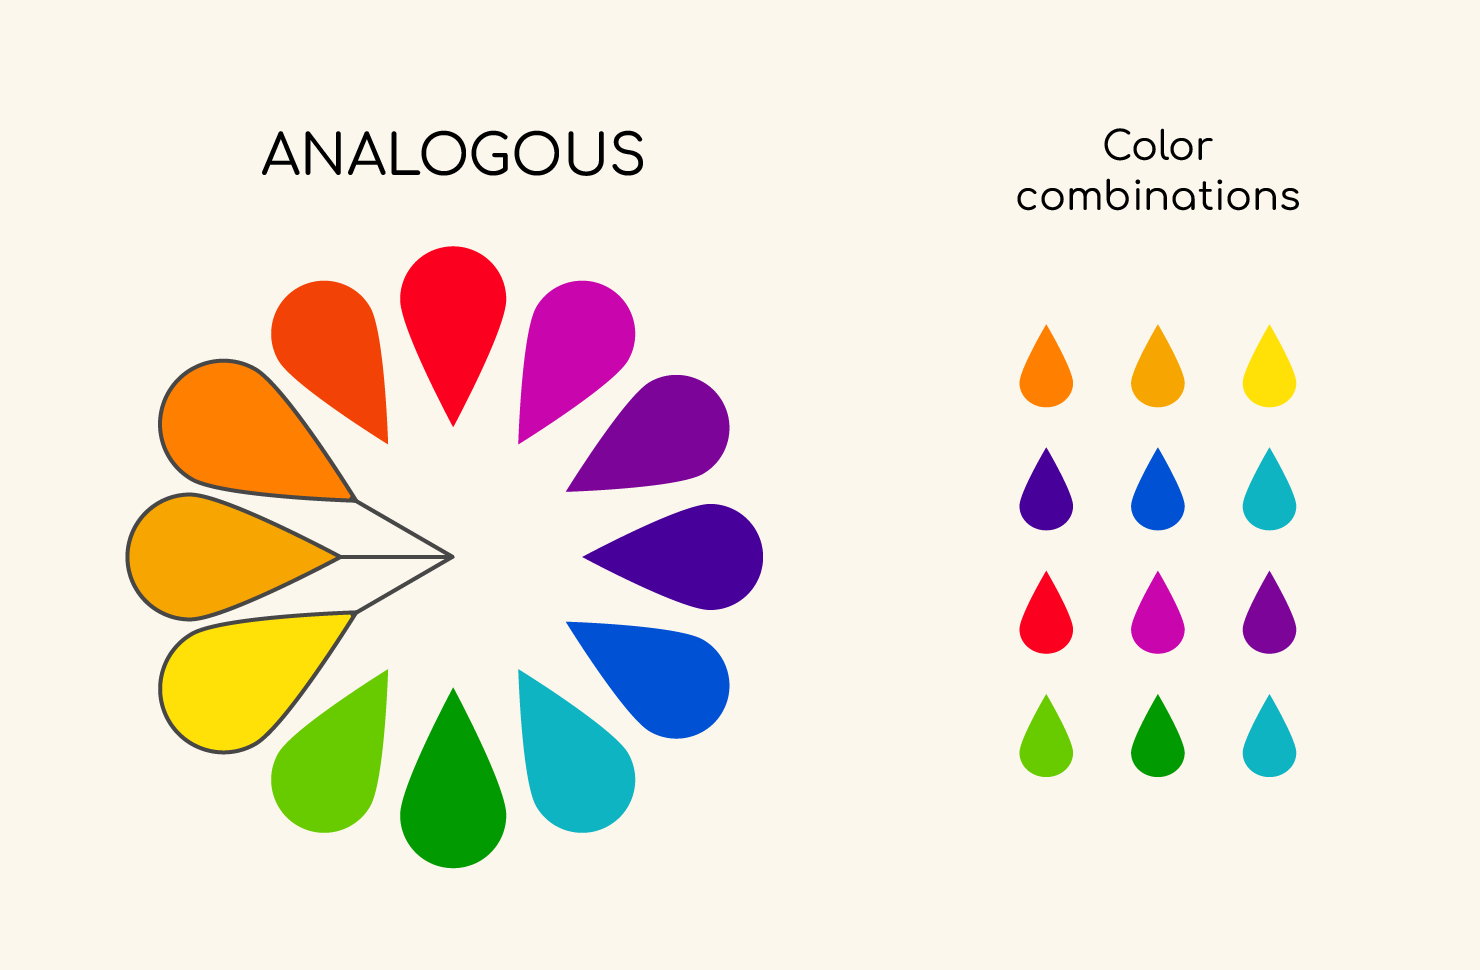 https://amadine.com/assets/img/articles/rules-of-color-combination/analogous-color-scheme@2x.png